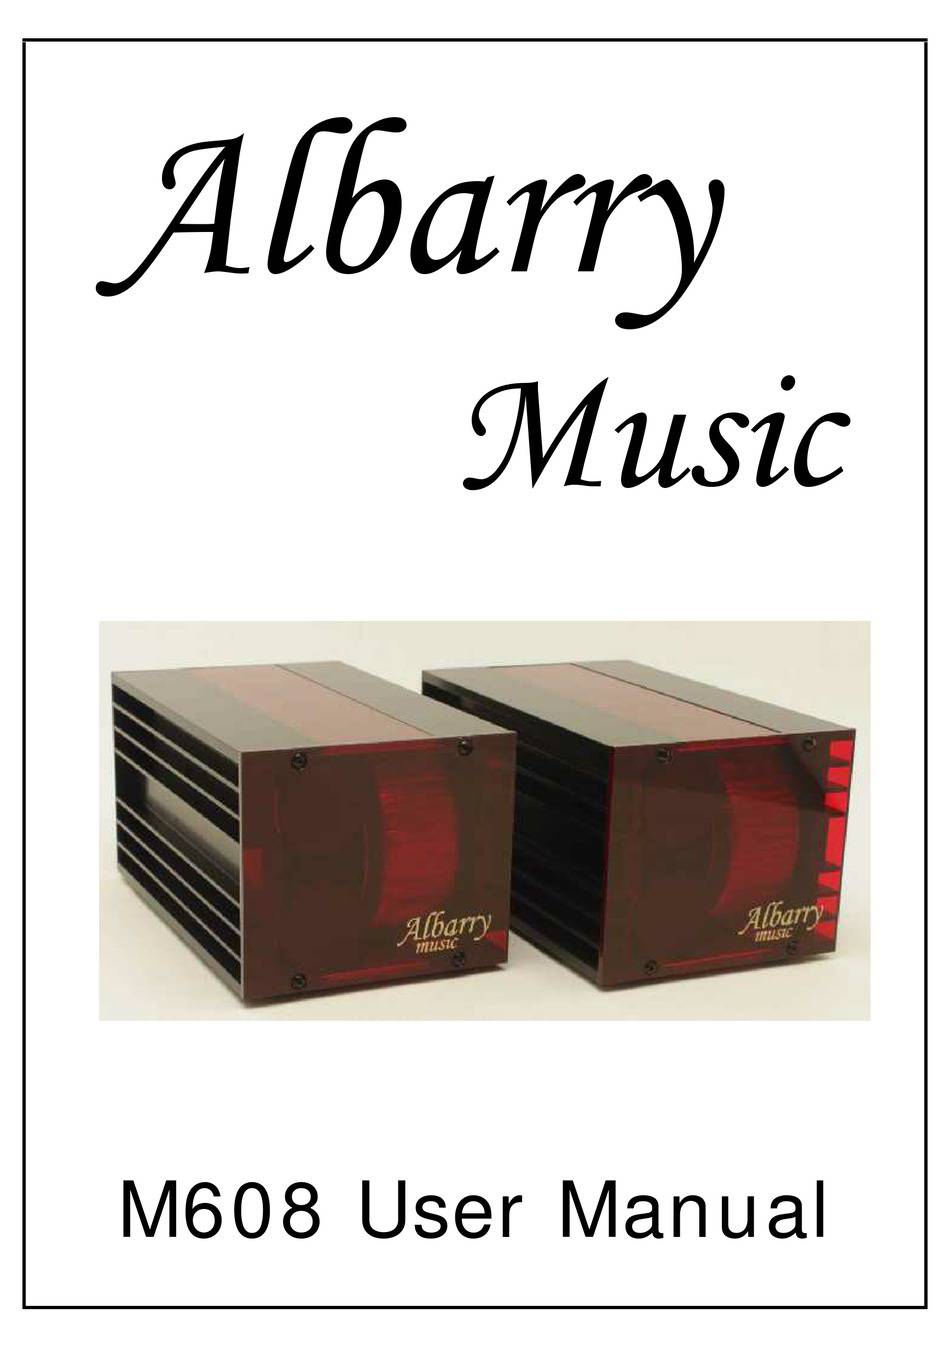 Albarry Music M608